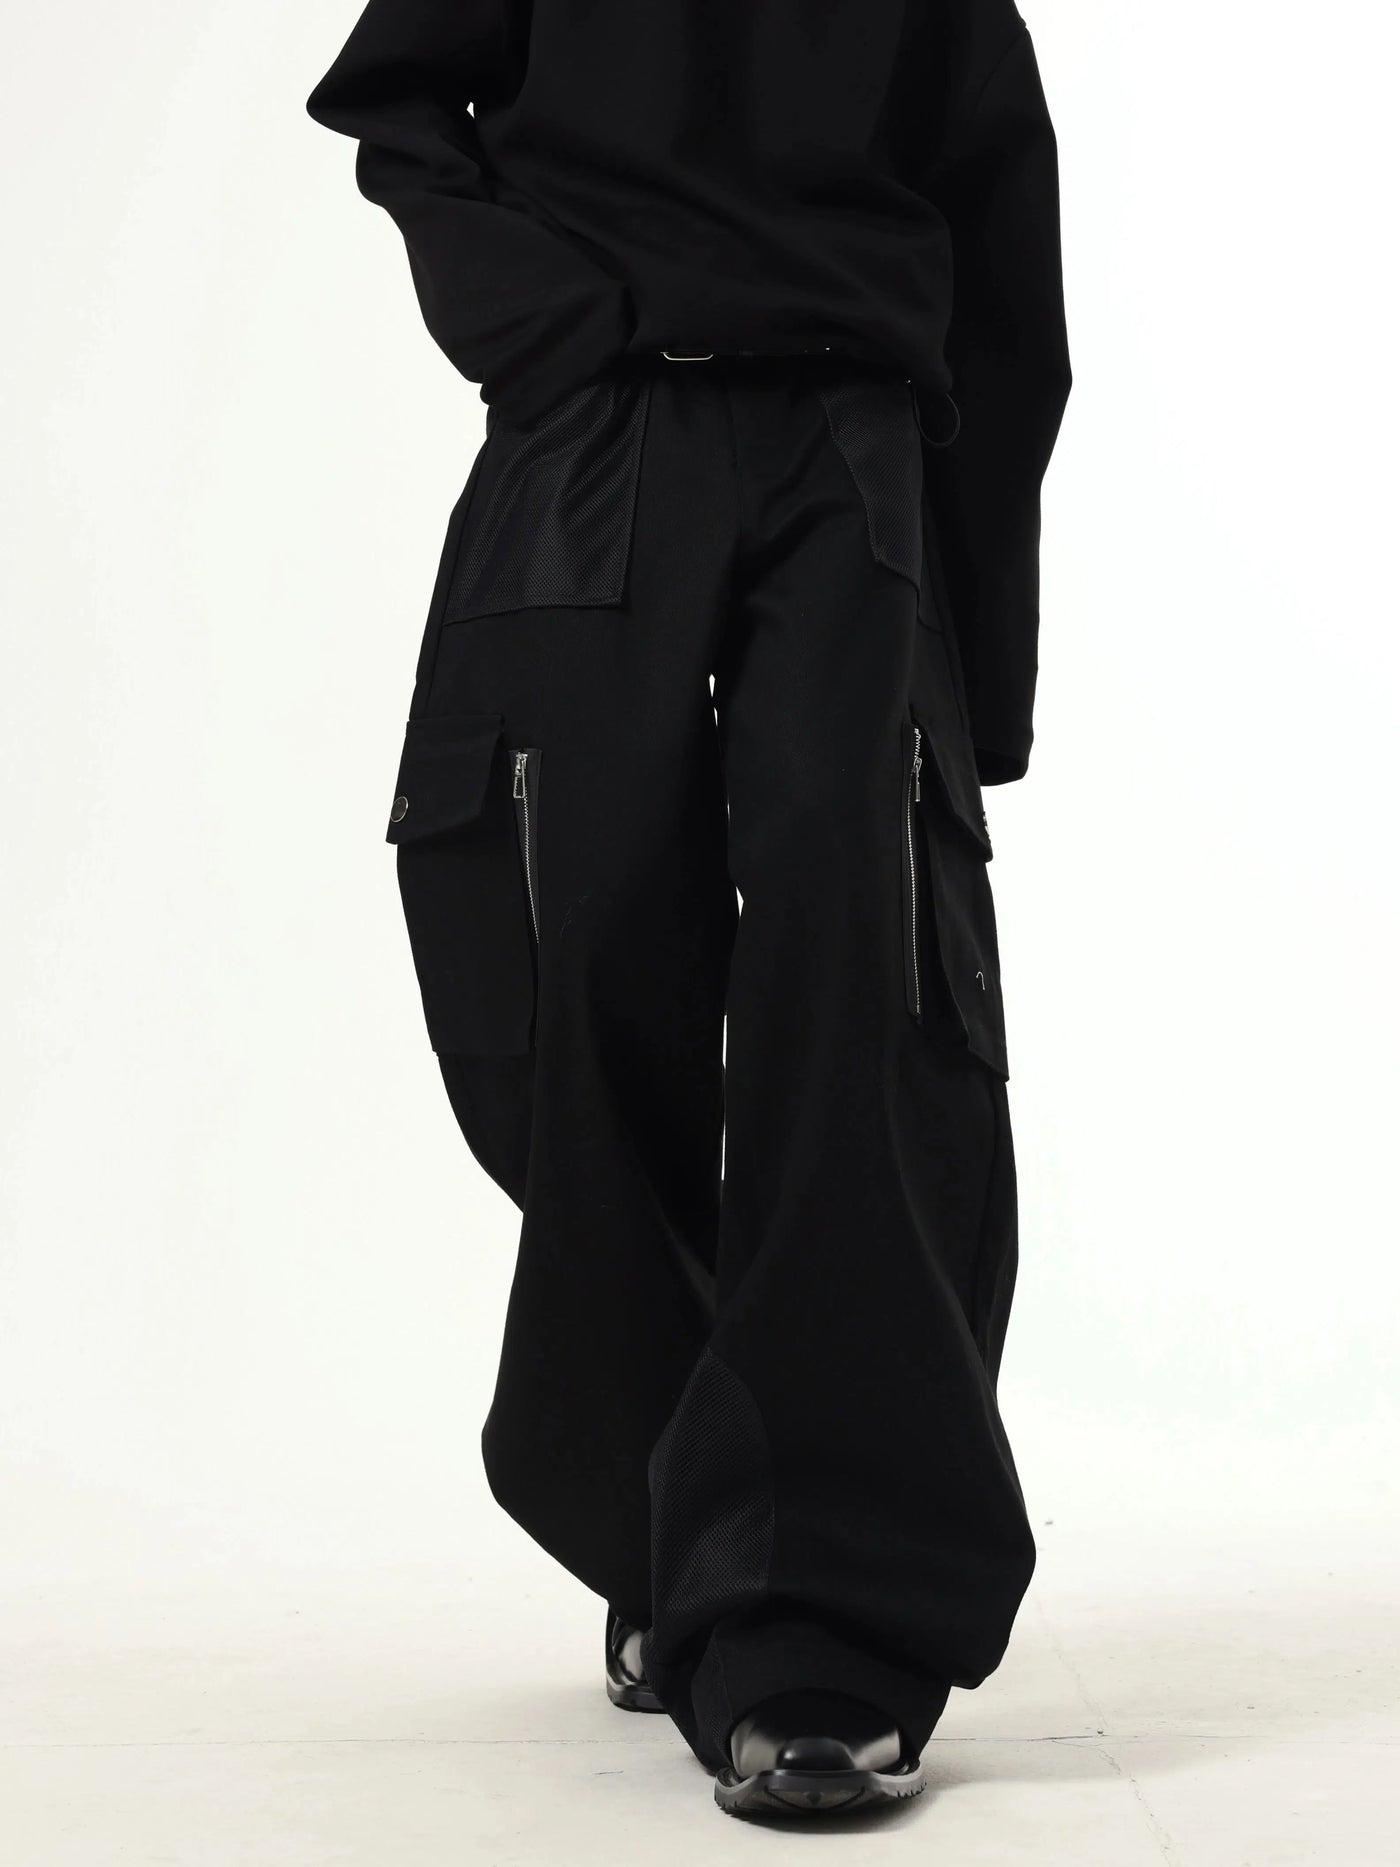 Solid Multi-Pocket Wide Leg Pants Korean Street Fashion Pants By Dark Fog Shop Online at OH Vault